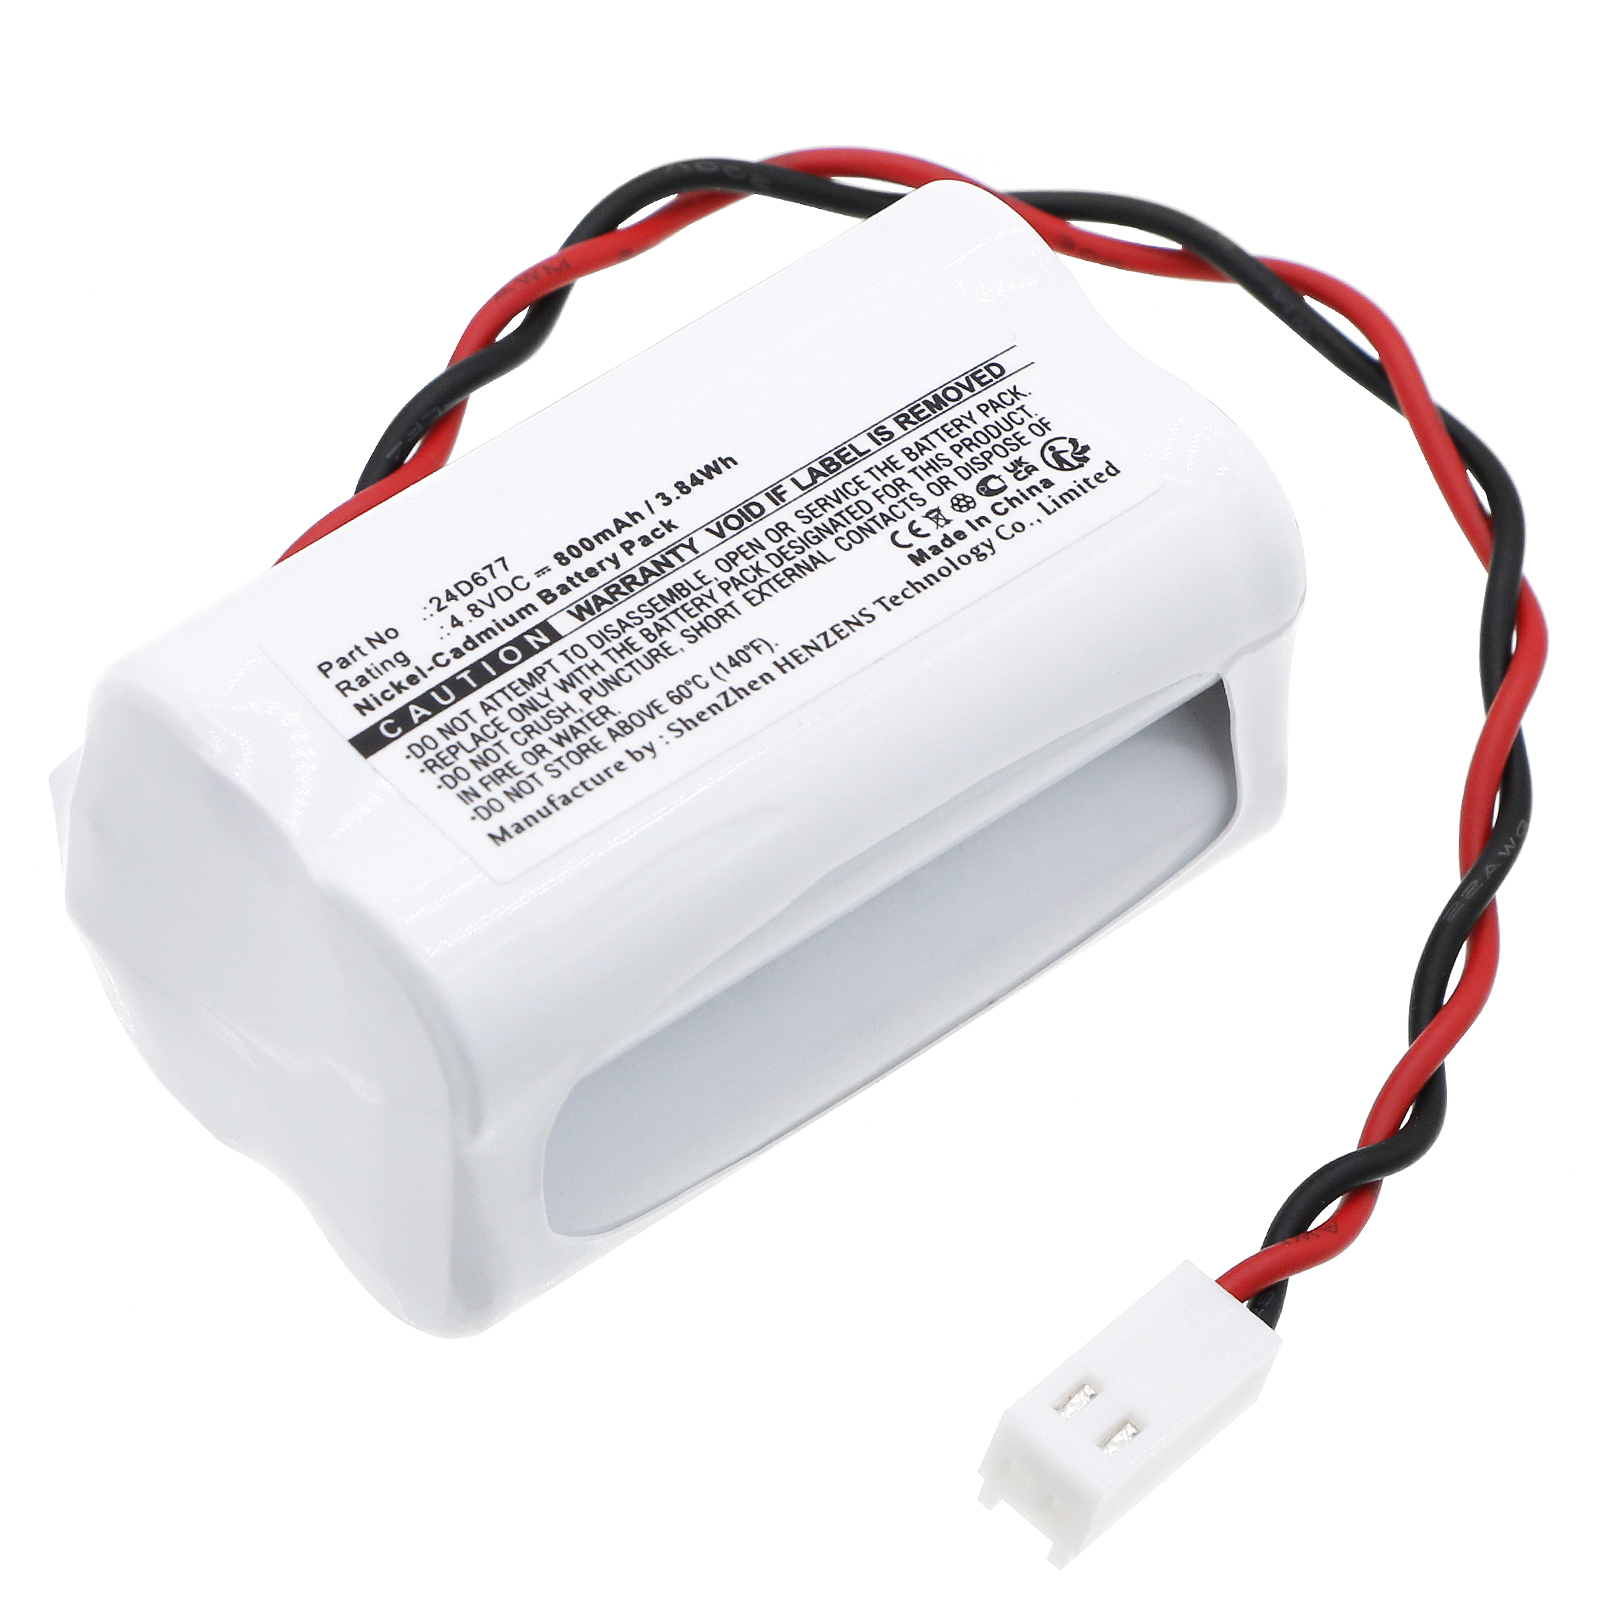 Synergy Digital Emergency Lighting Battery, Compatible with Dual-Lite 24D677 Emergency Lighting Battery (Ni-CD, 4.8V, 800mAh)